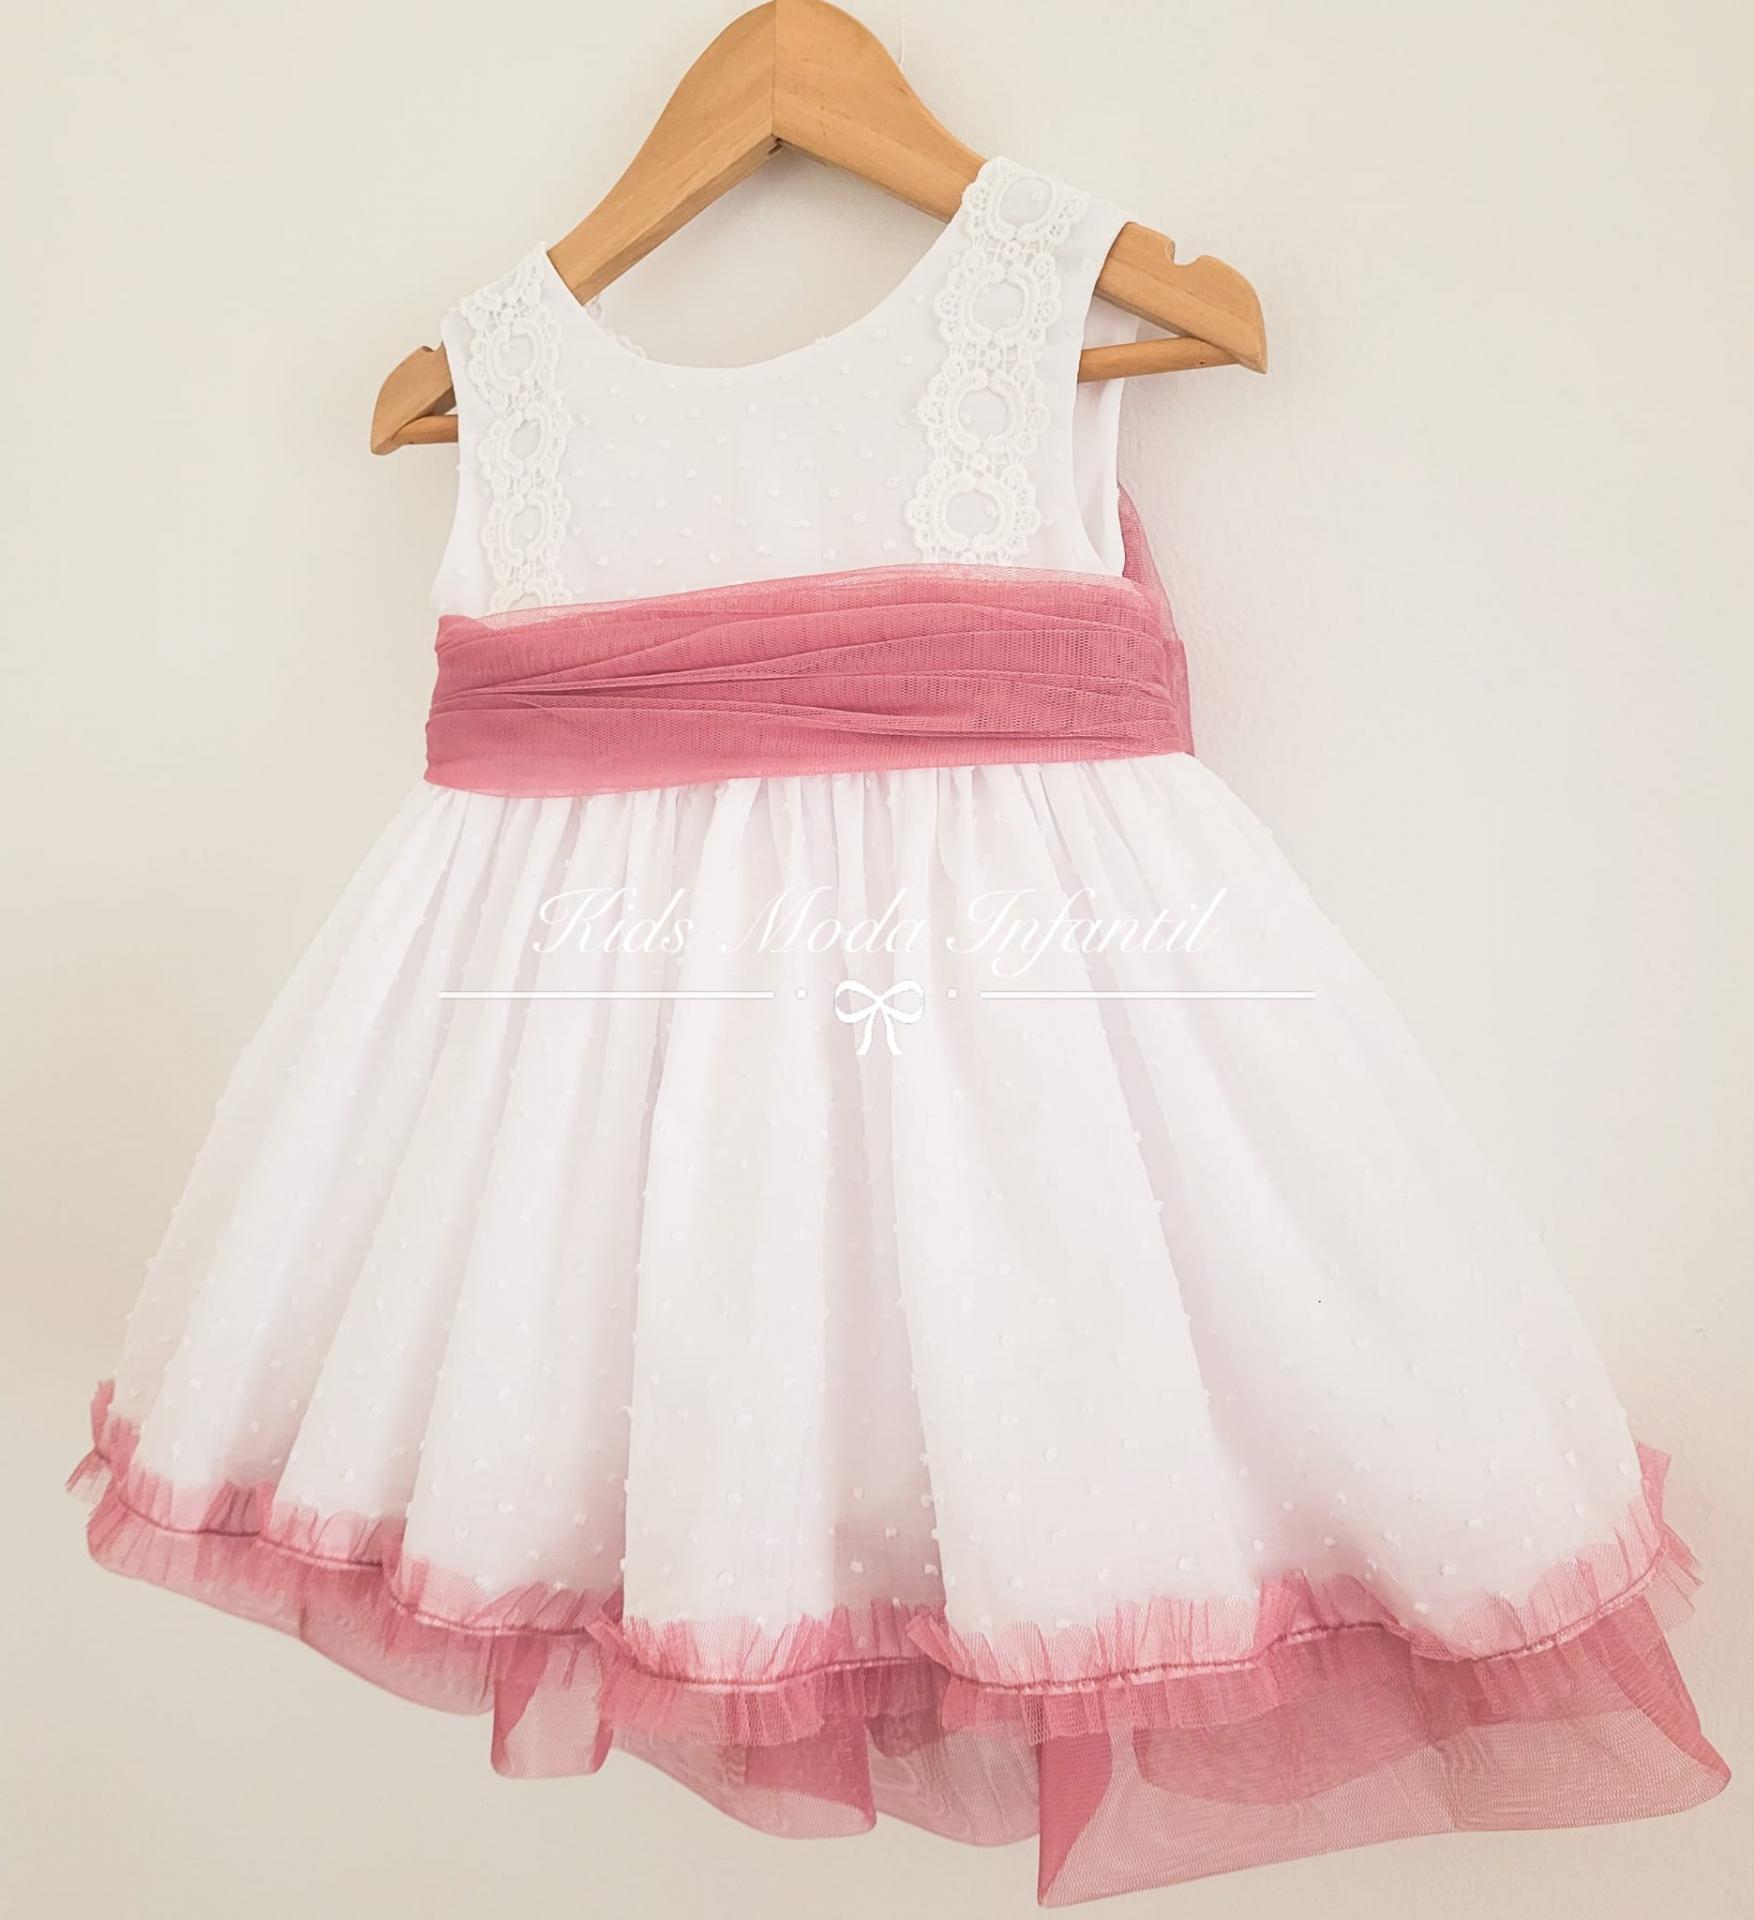 Vestido niña vestir arras de plumeti blanco con tul rosa fuerte Eva Martínez Artesanía